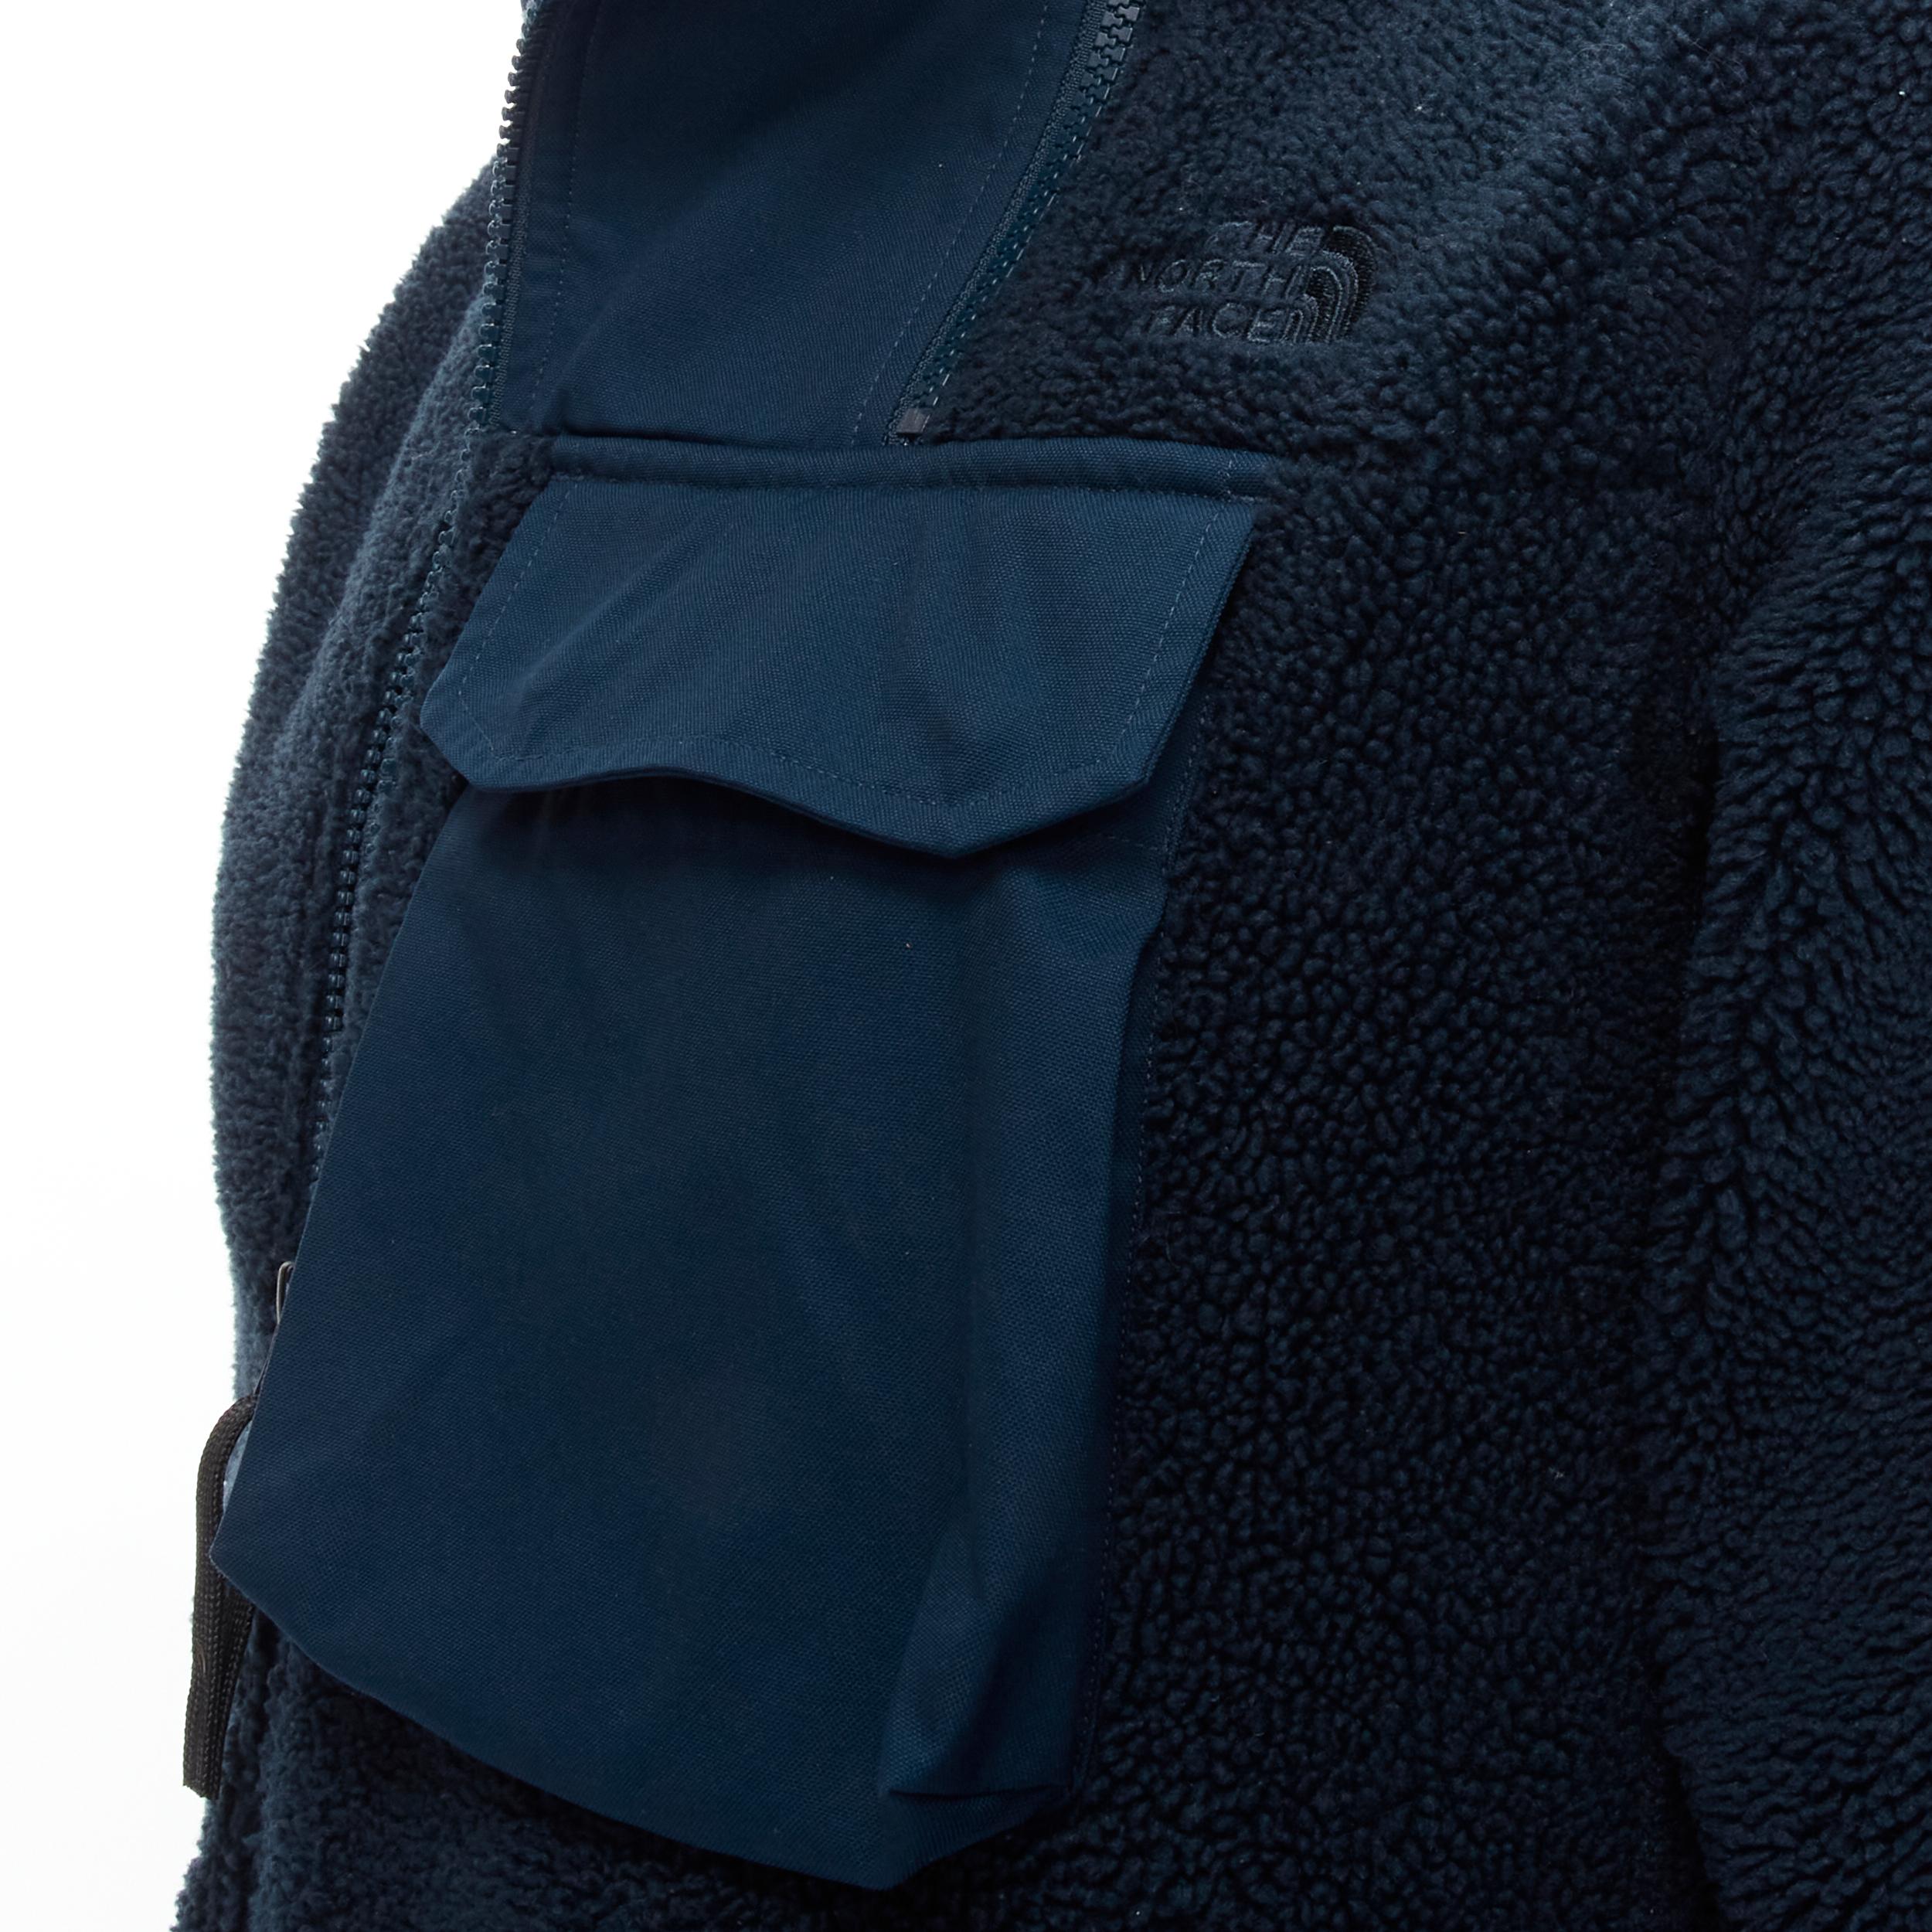 NORTH FACE navy blue fleece patch flap pocket asymmetric zip up jacket XS S For Sale 2